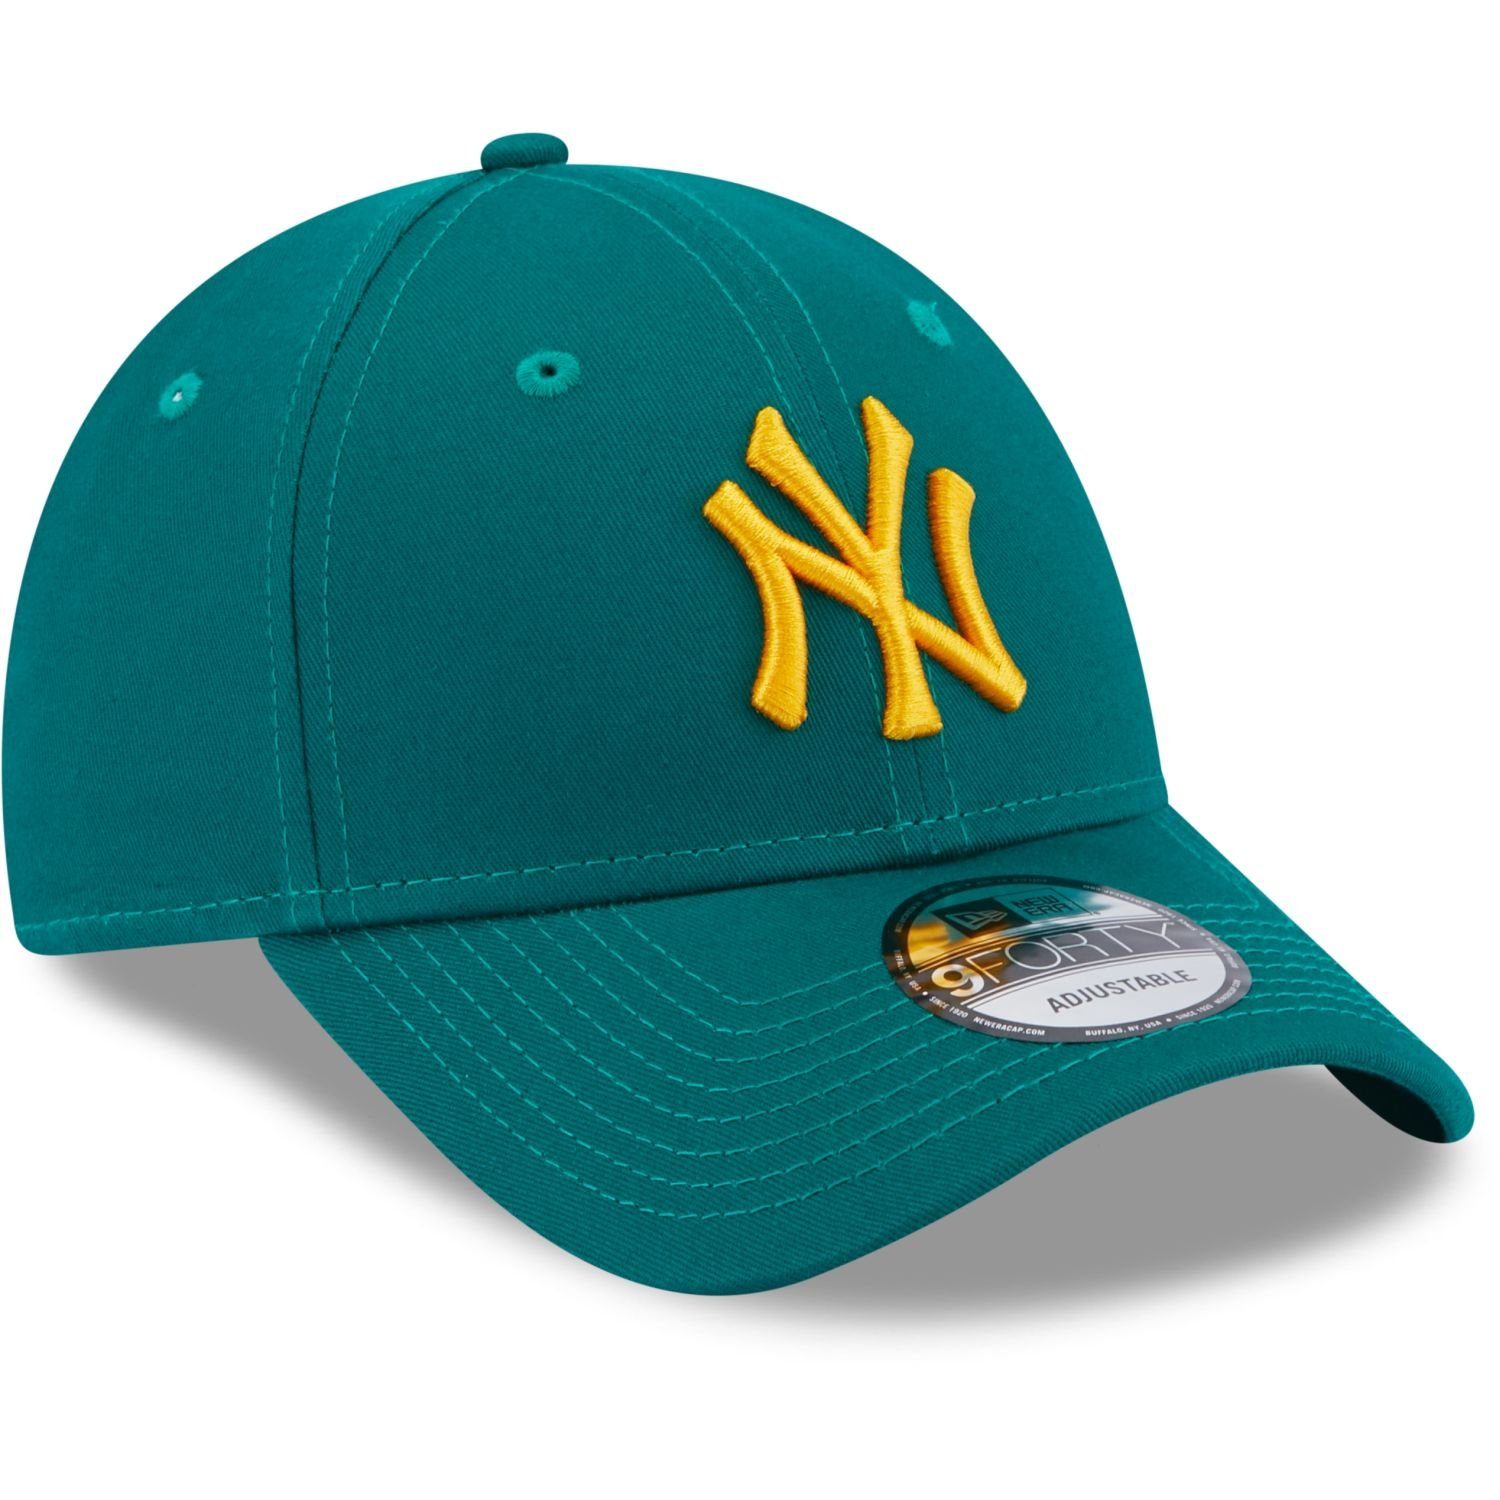 New New 9Forty Cap dunkelgrün Baseball Yankees Strapback blaugrün York Era